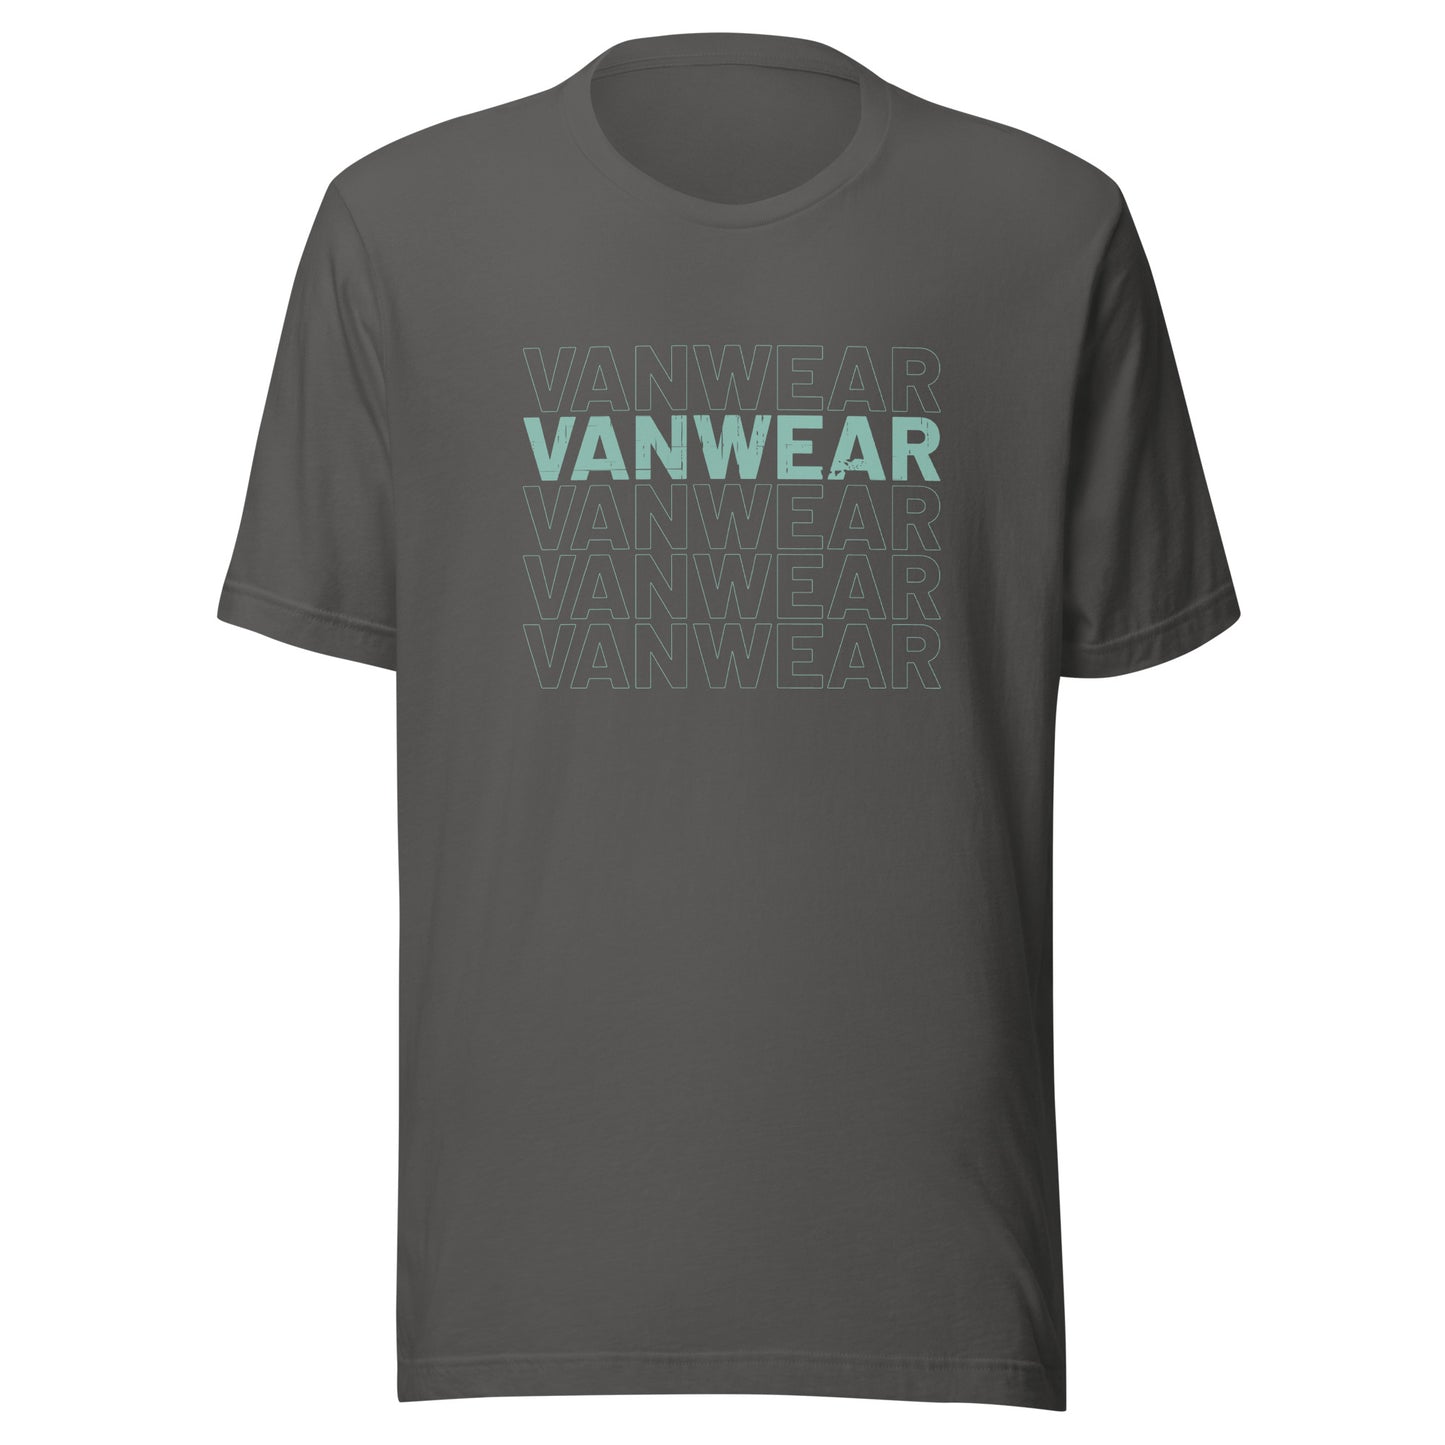 Vanwear Authentic Campervan Unisex T-Shirt - 5 Lines